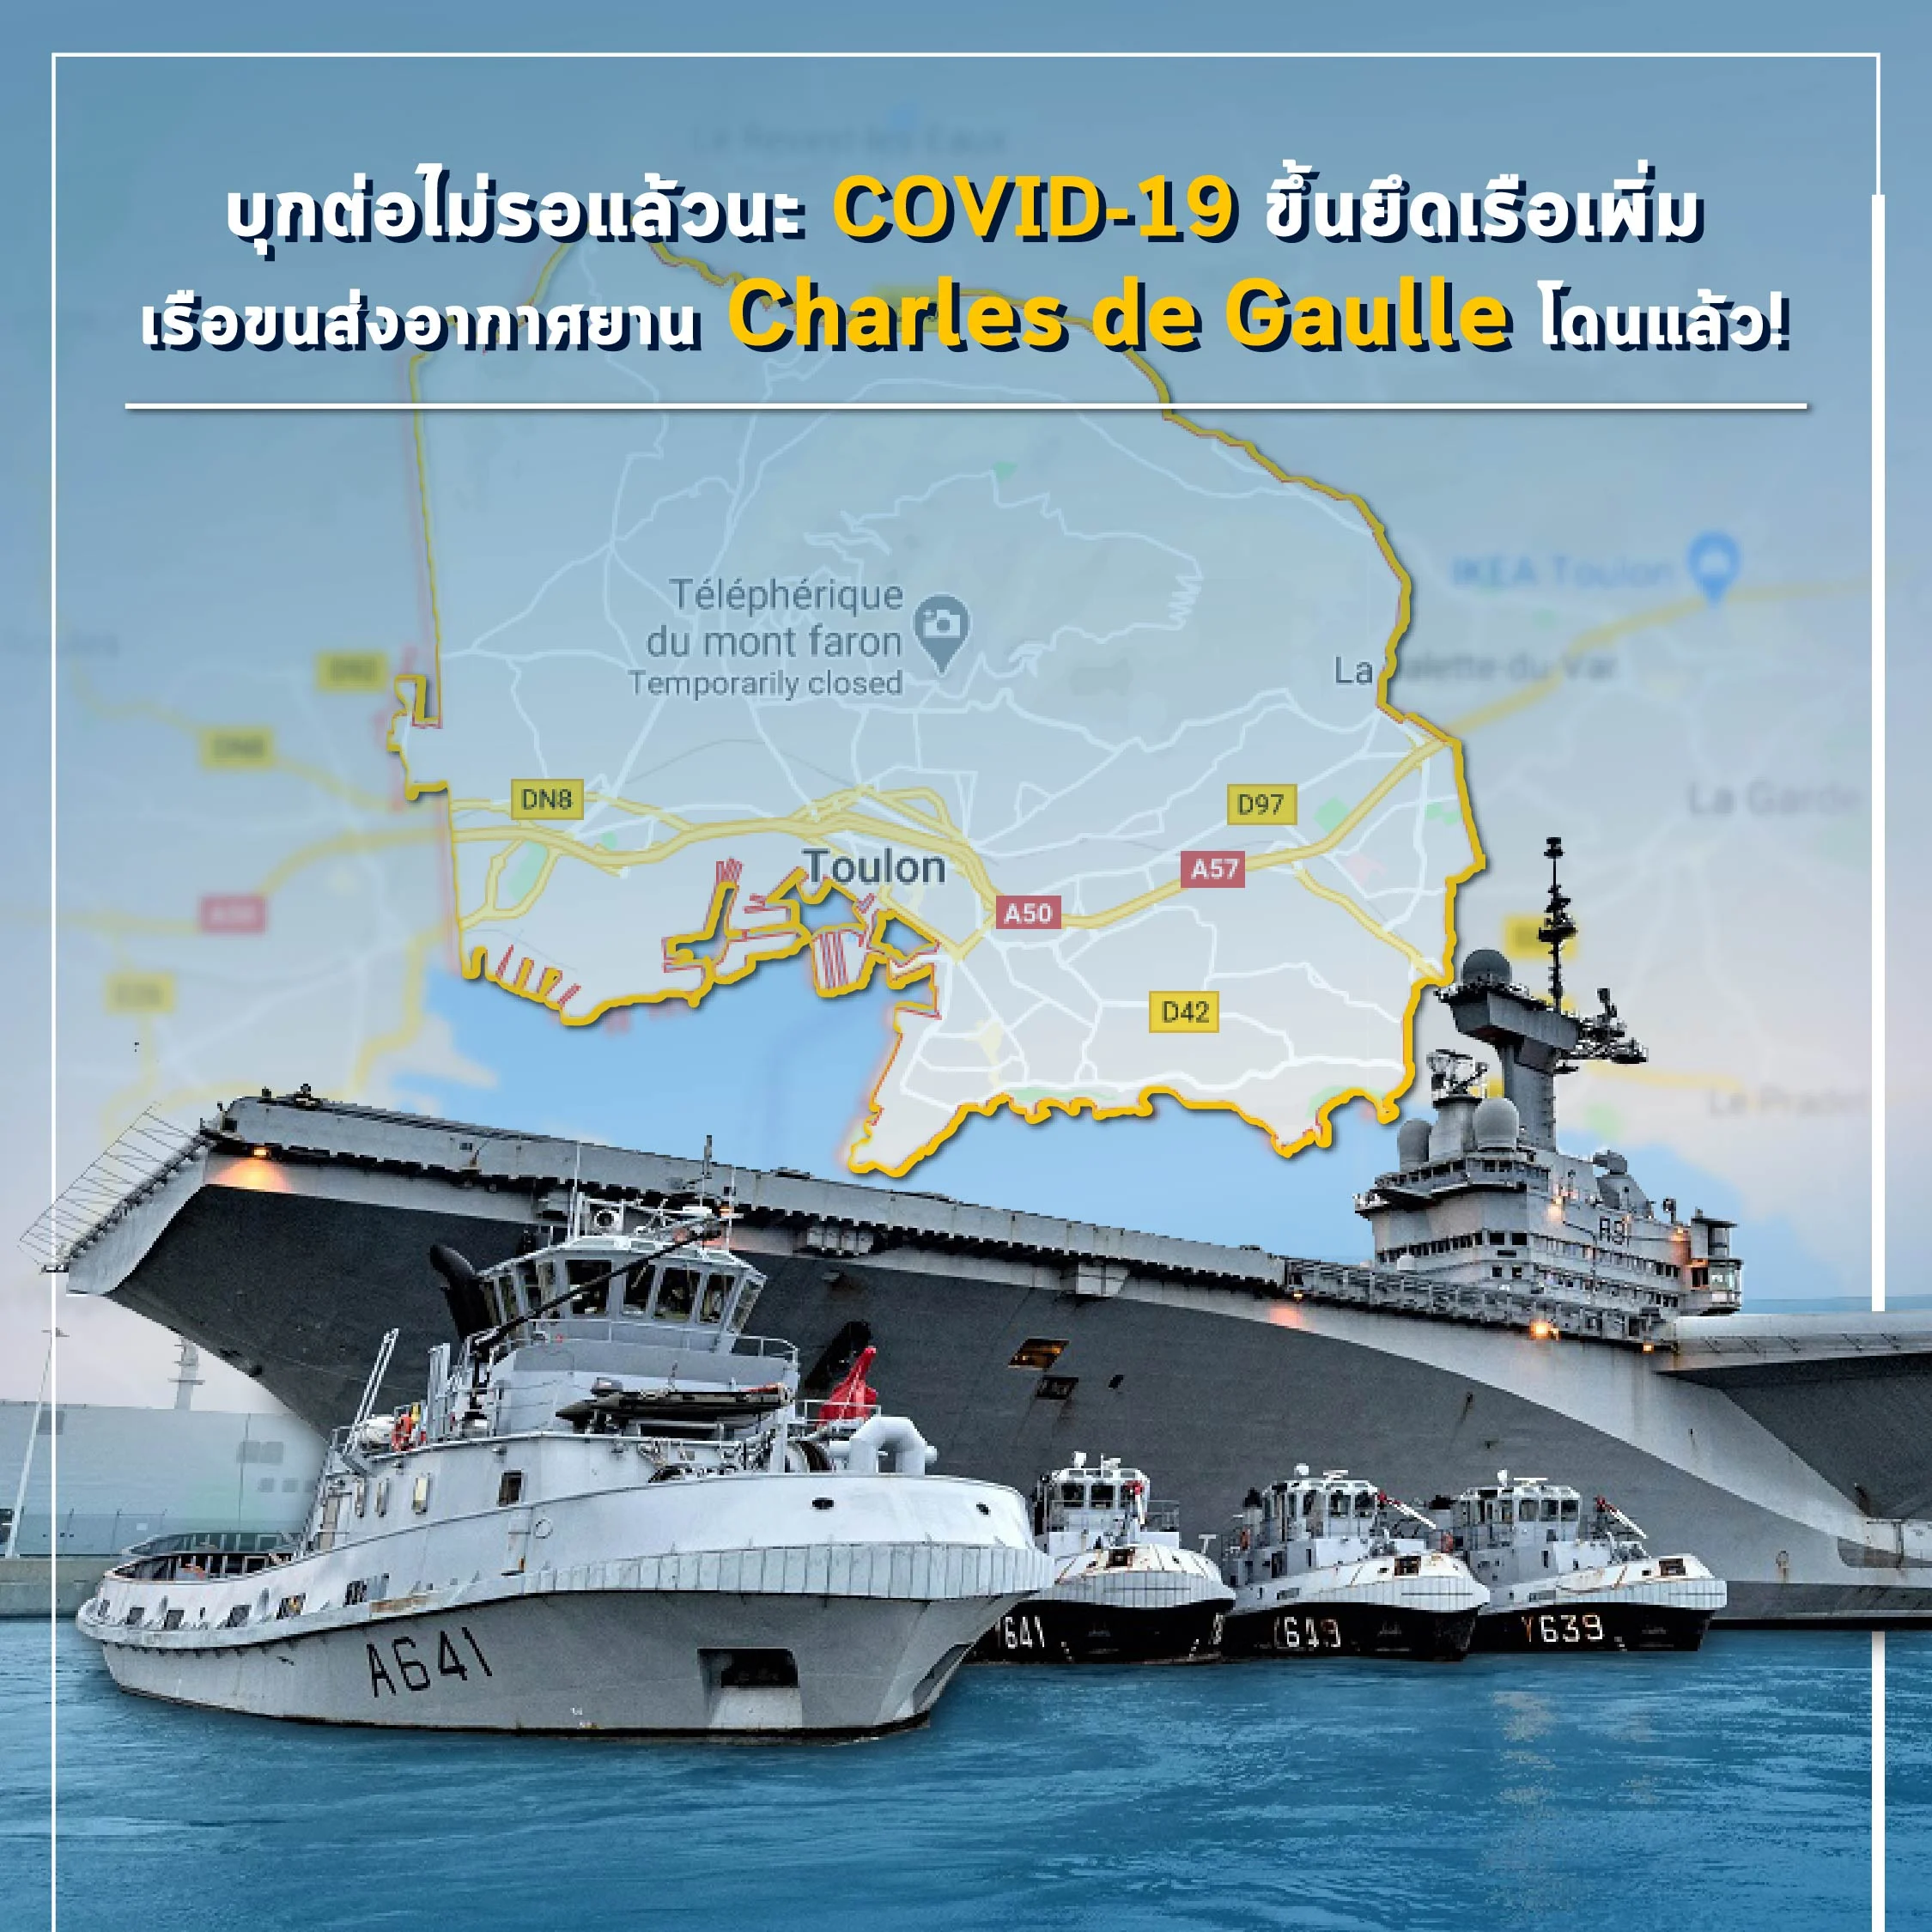 COVID-19 ขึ้นยึดเรือเพิ่ม เรือขนส่งอากาศยาน Charles de Gaulle โดนแล้ว!